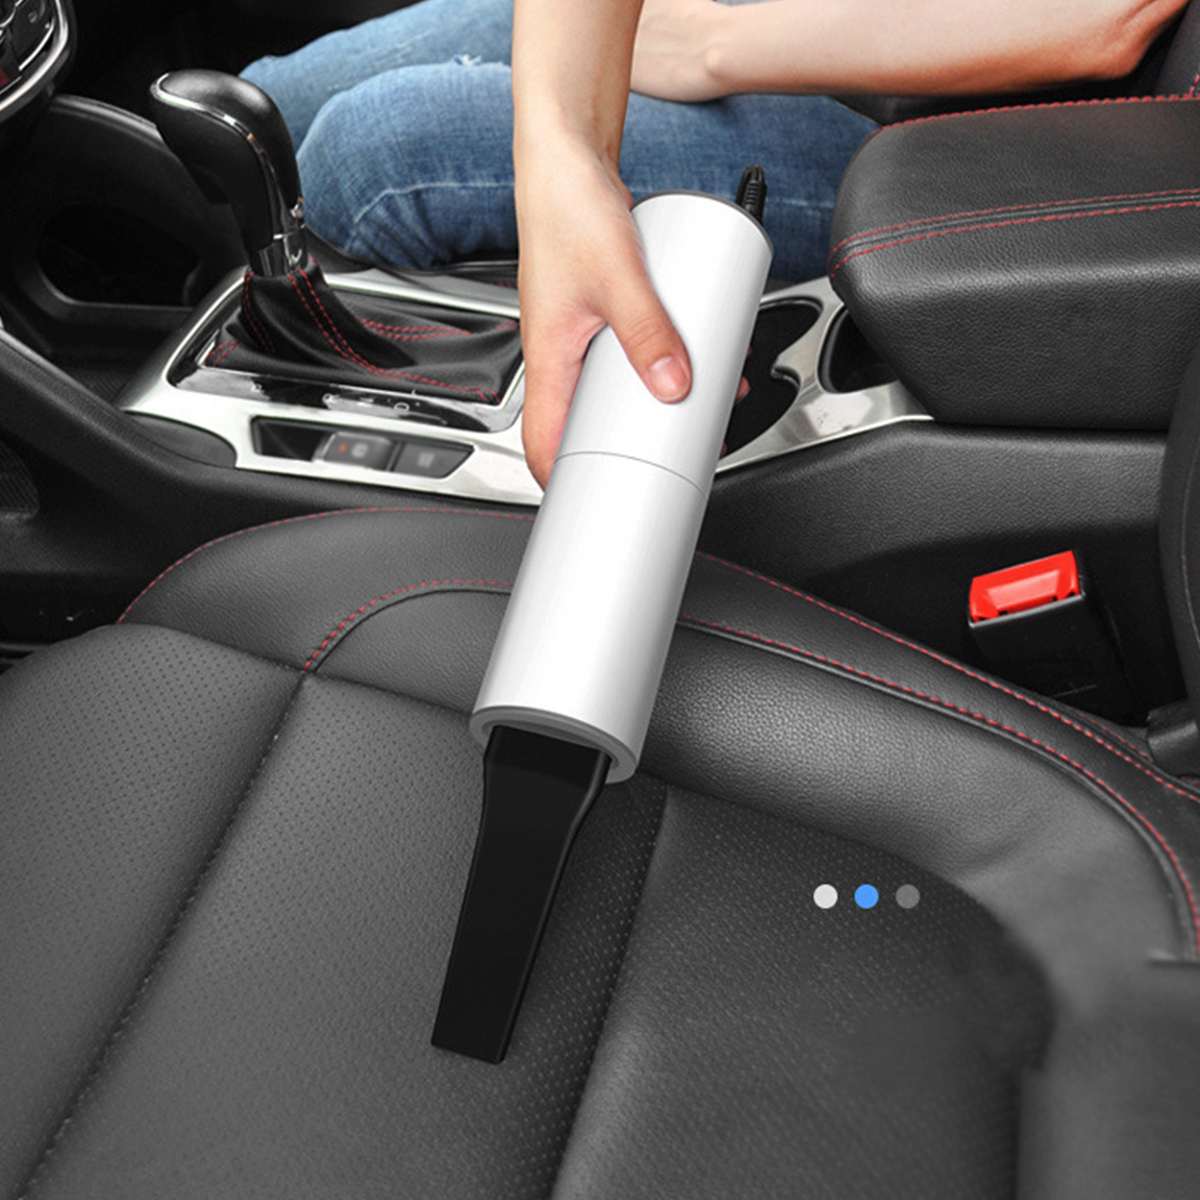 Mini Handheld car vacuum cleaner